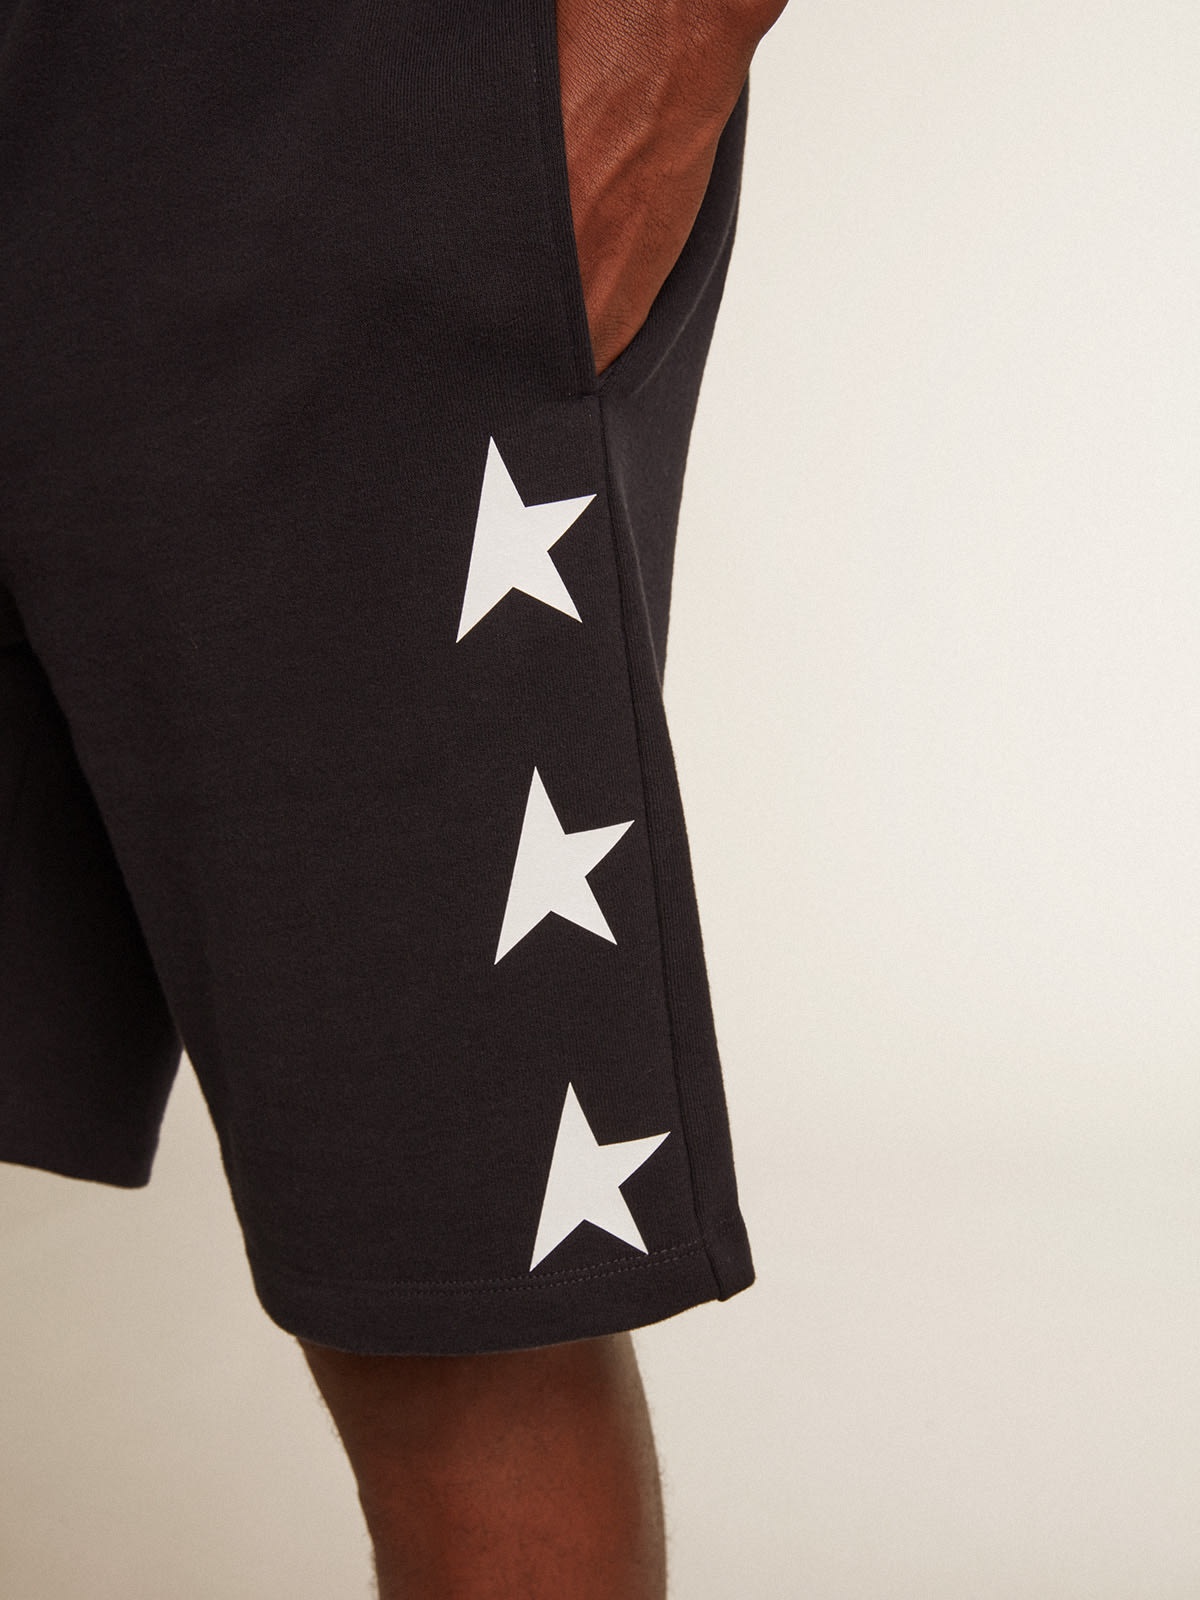 Men's black bermuda shorts with white stars - 5